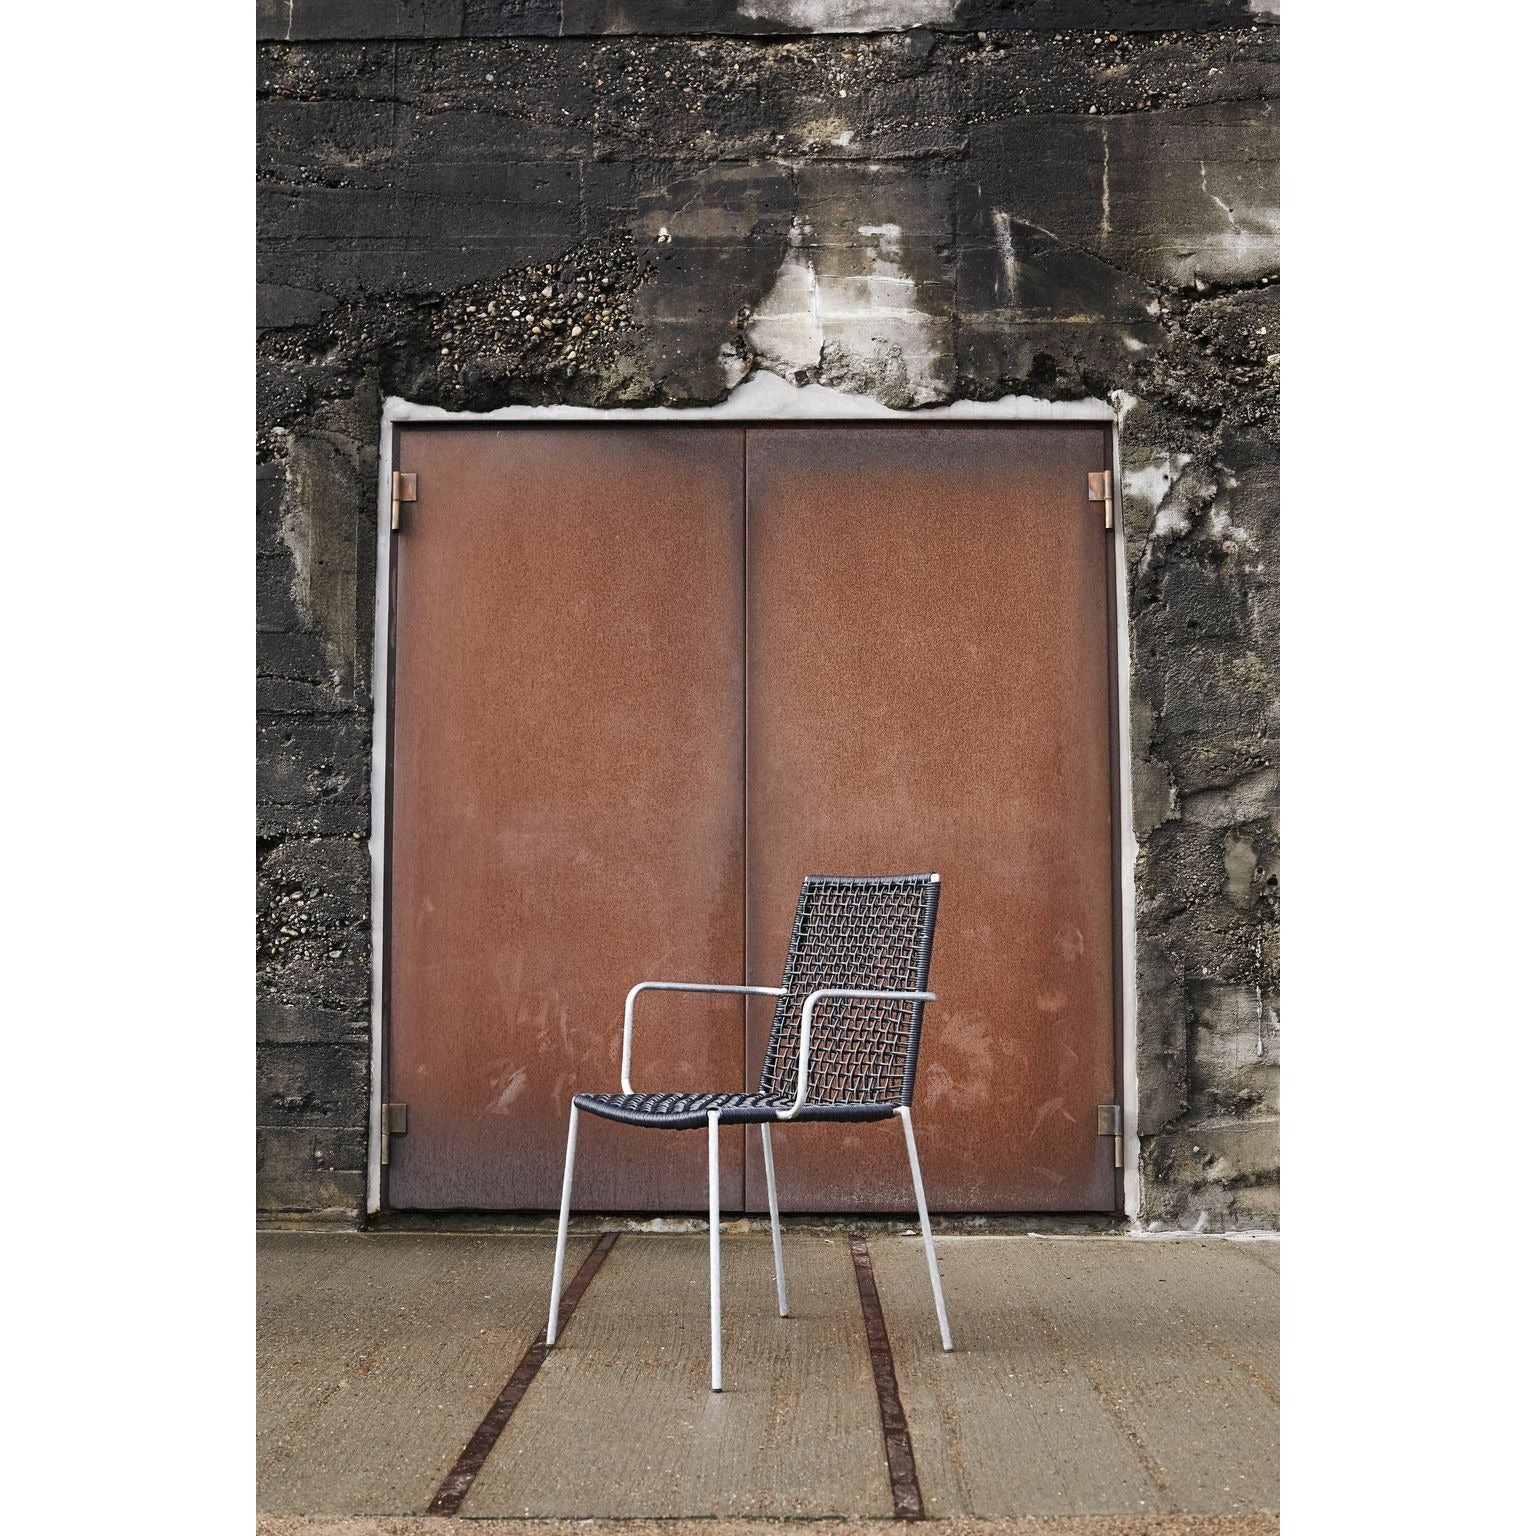 Muubs Riva椅子，黑色和镀锌椅